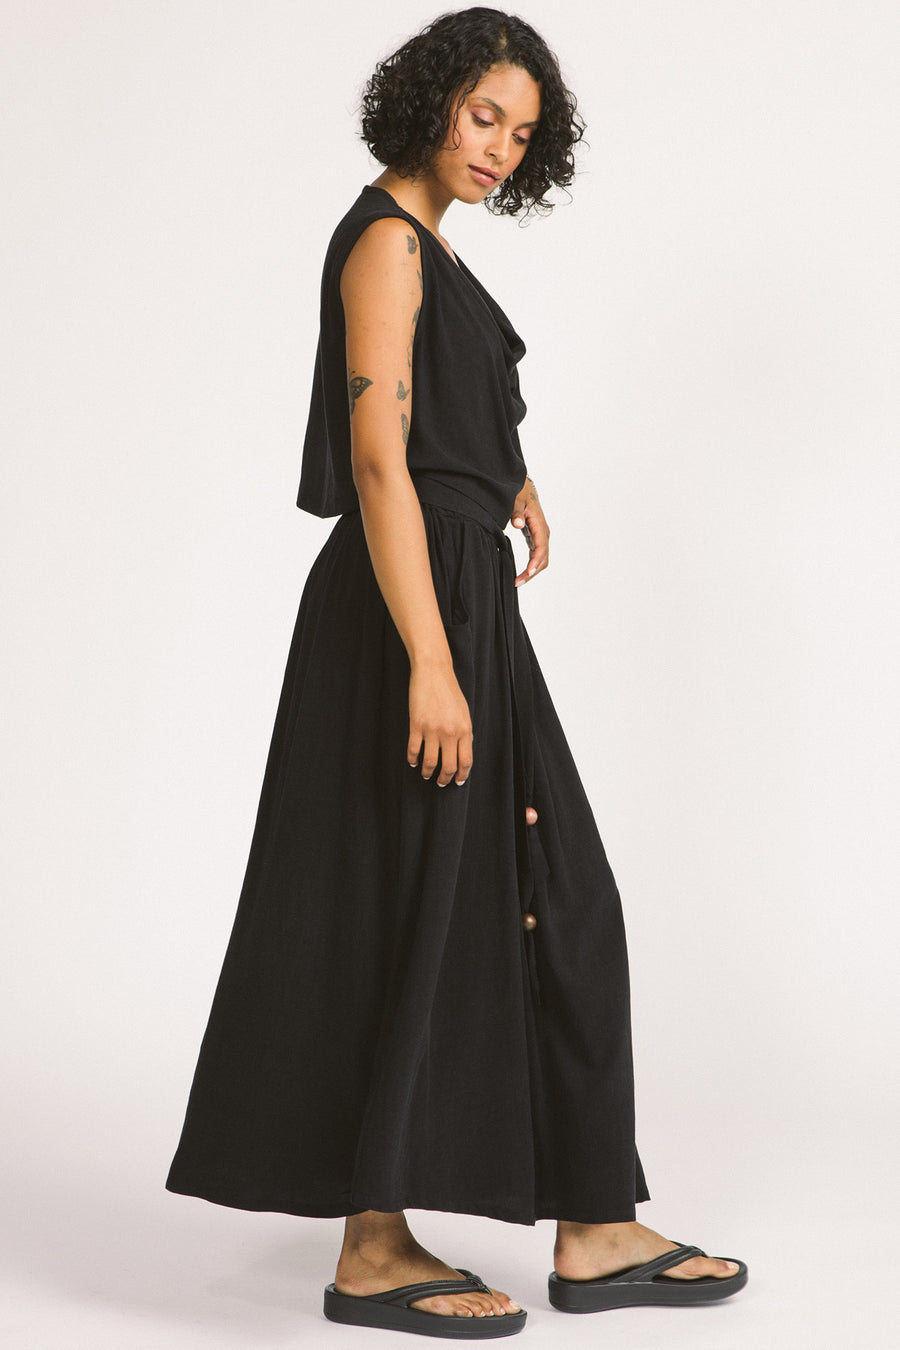 Side view of woman wearing black cowl neck sleeveless Kiko blouse by Allison Wonderland. 